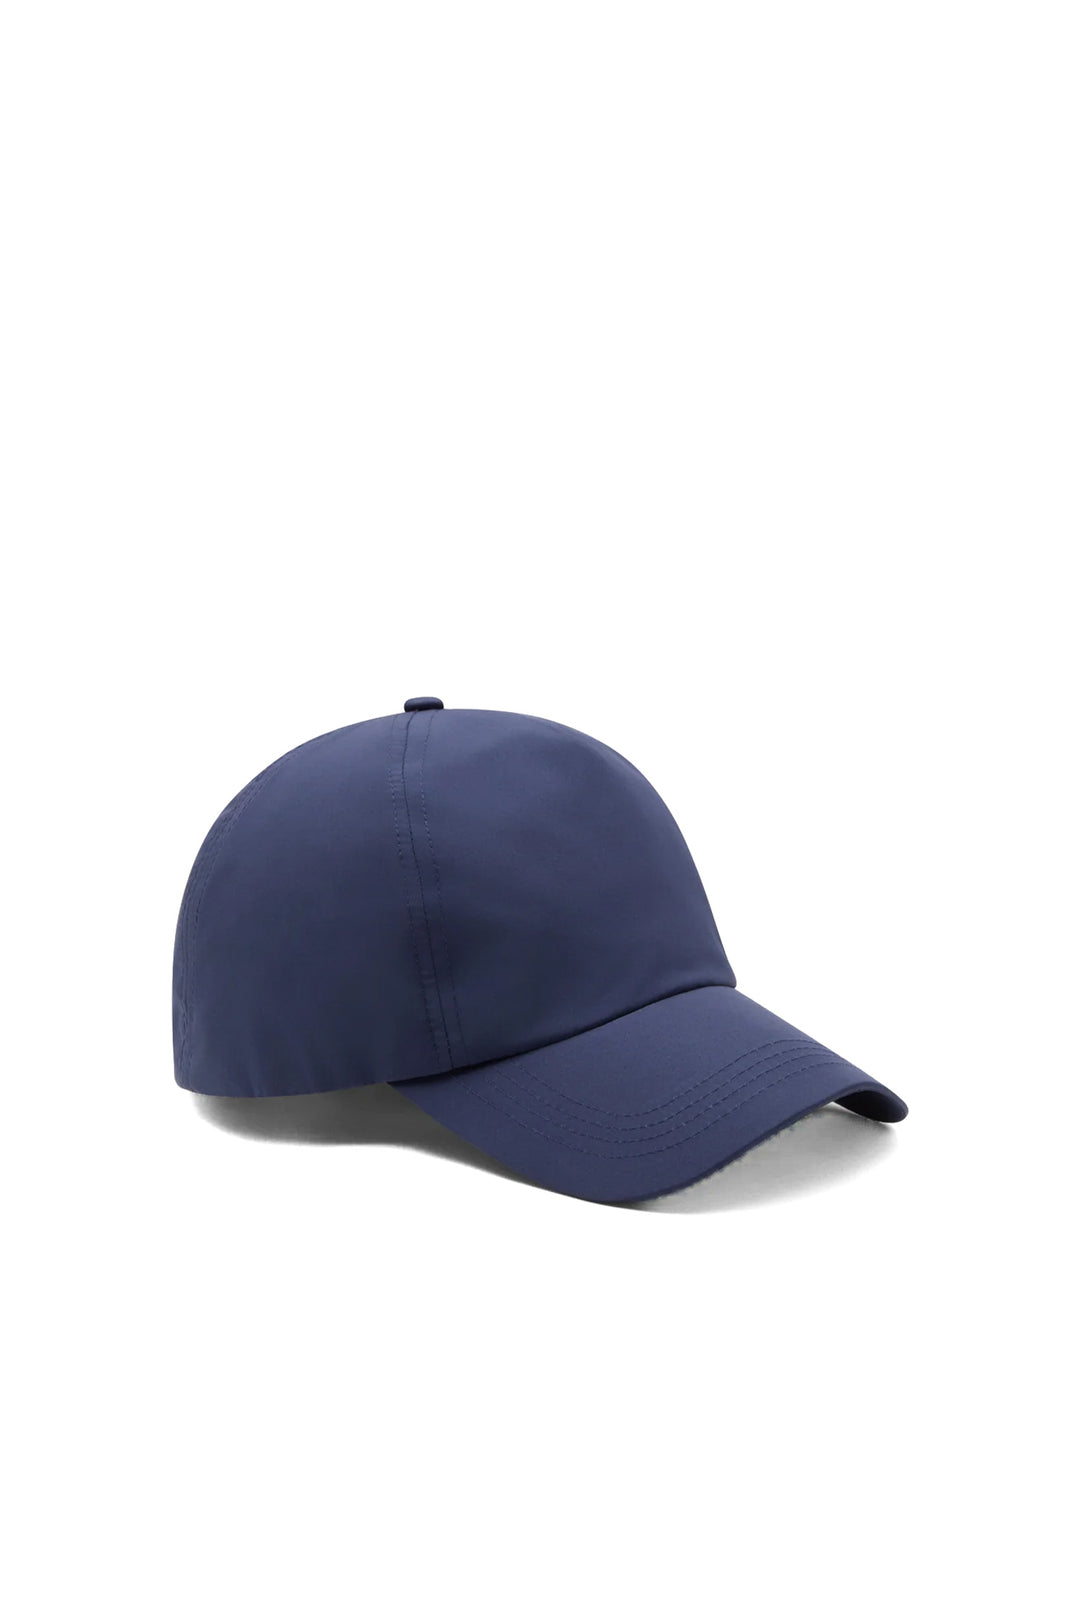 SAVE THE DUCK Cappello da baseball blu navy “CLEBER” - Mancinelli 1954